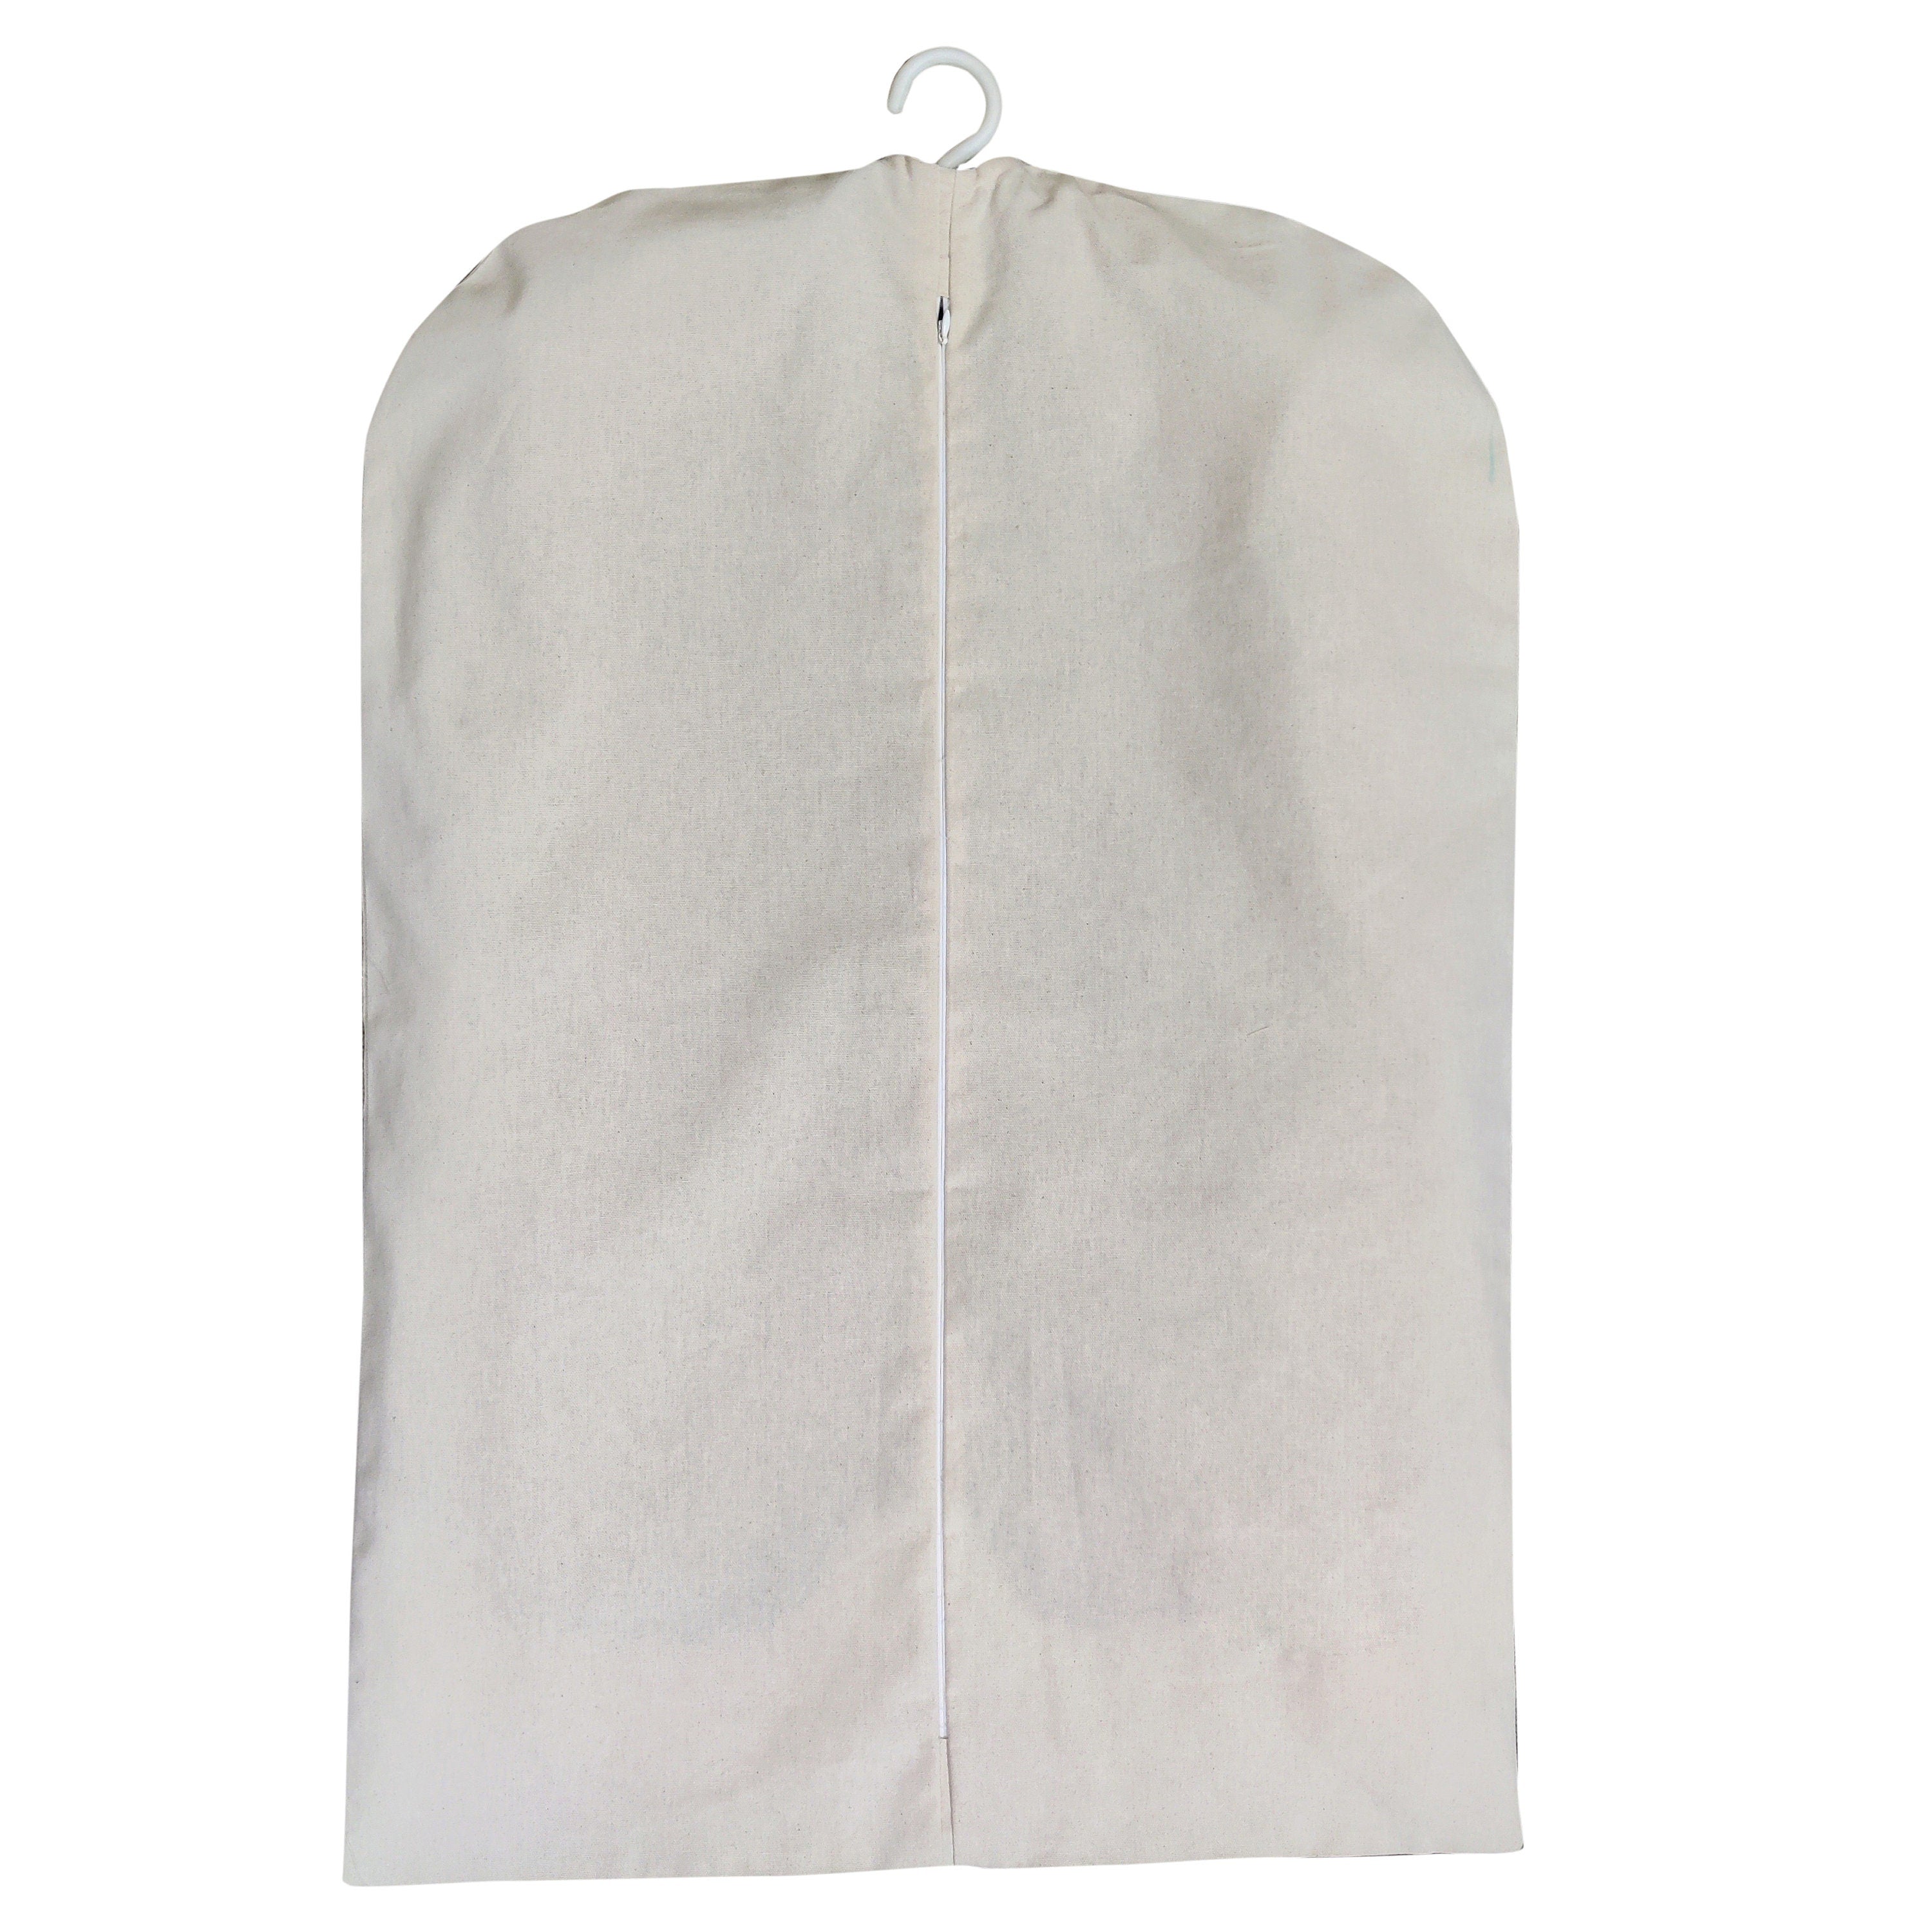 100% Cotton Canvas Garment Cover for Suits, Coats, Dresses; Travel Bag  (Large (24x48), Off-White)